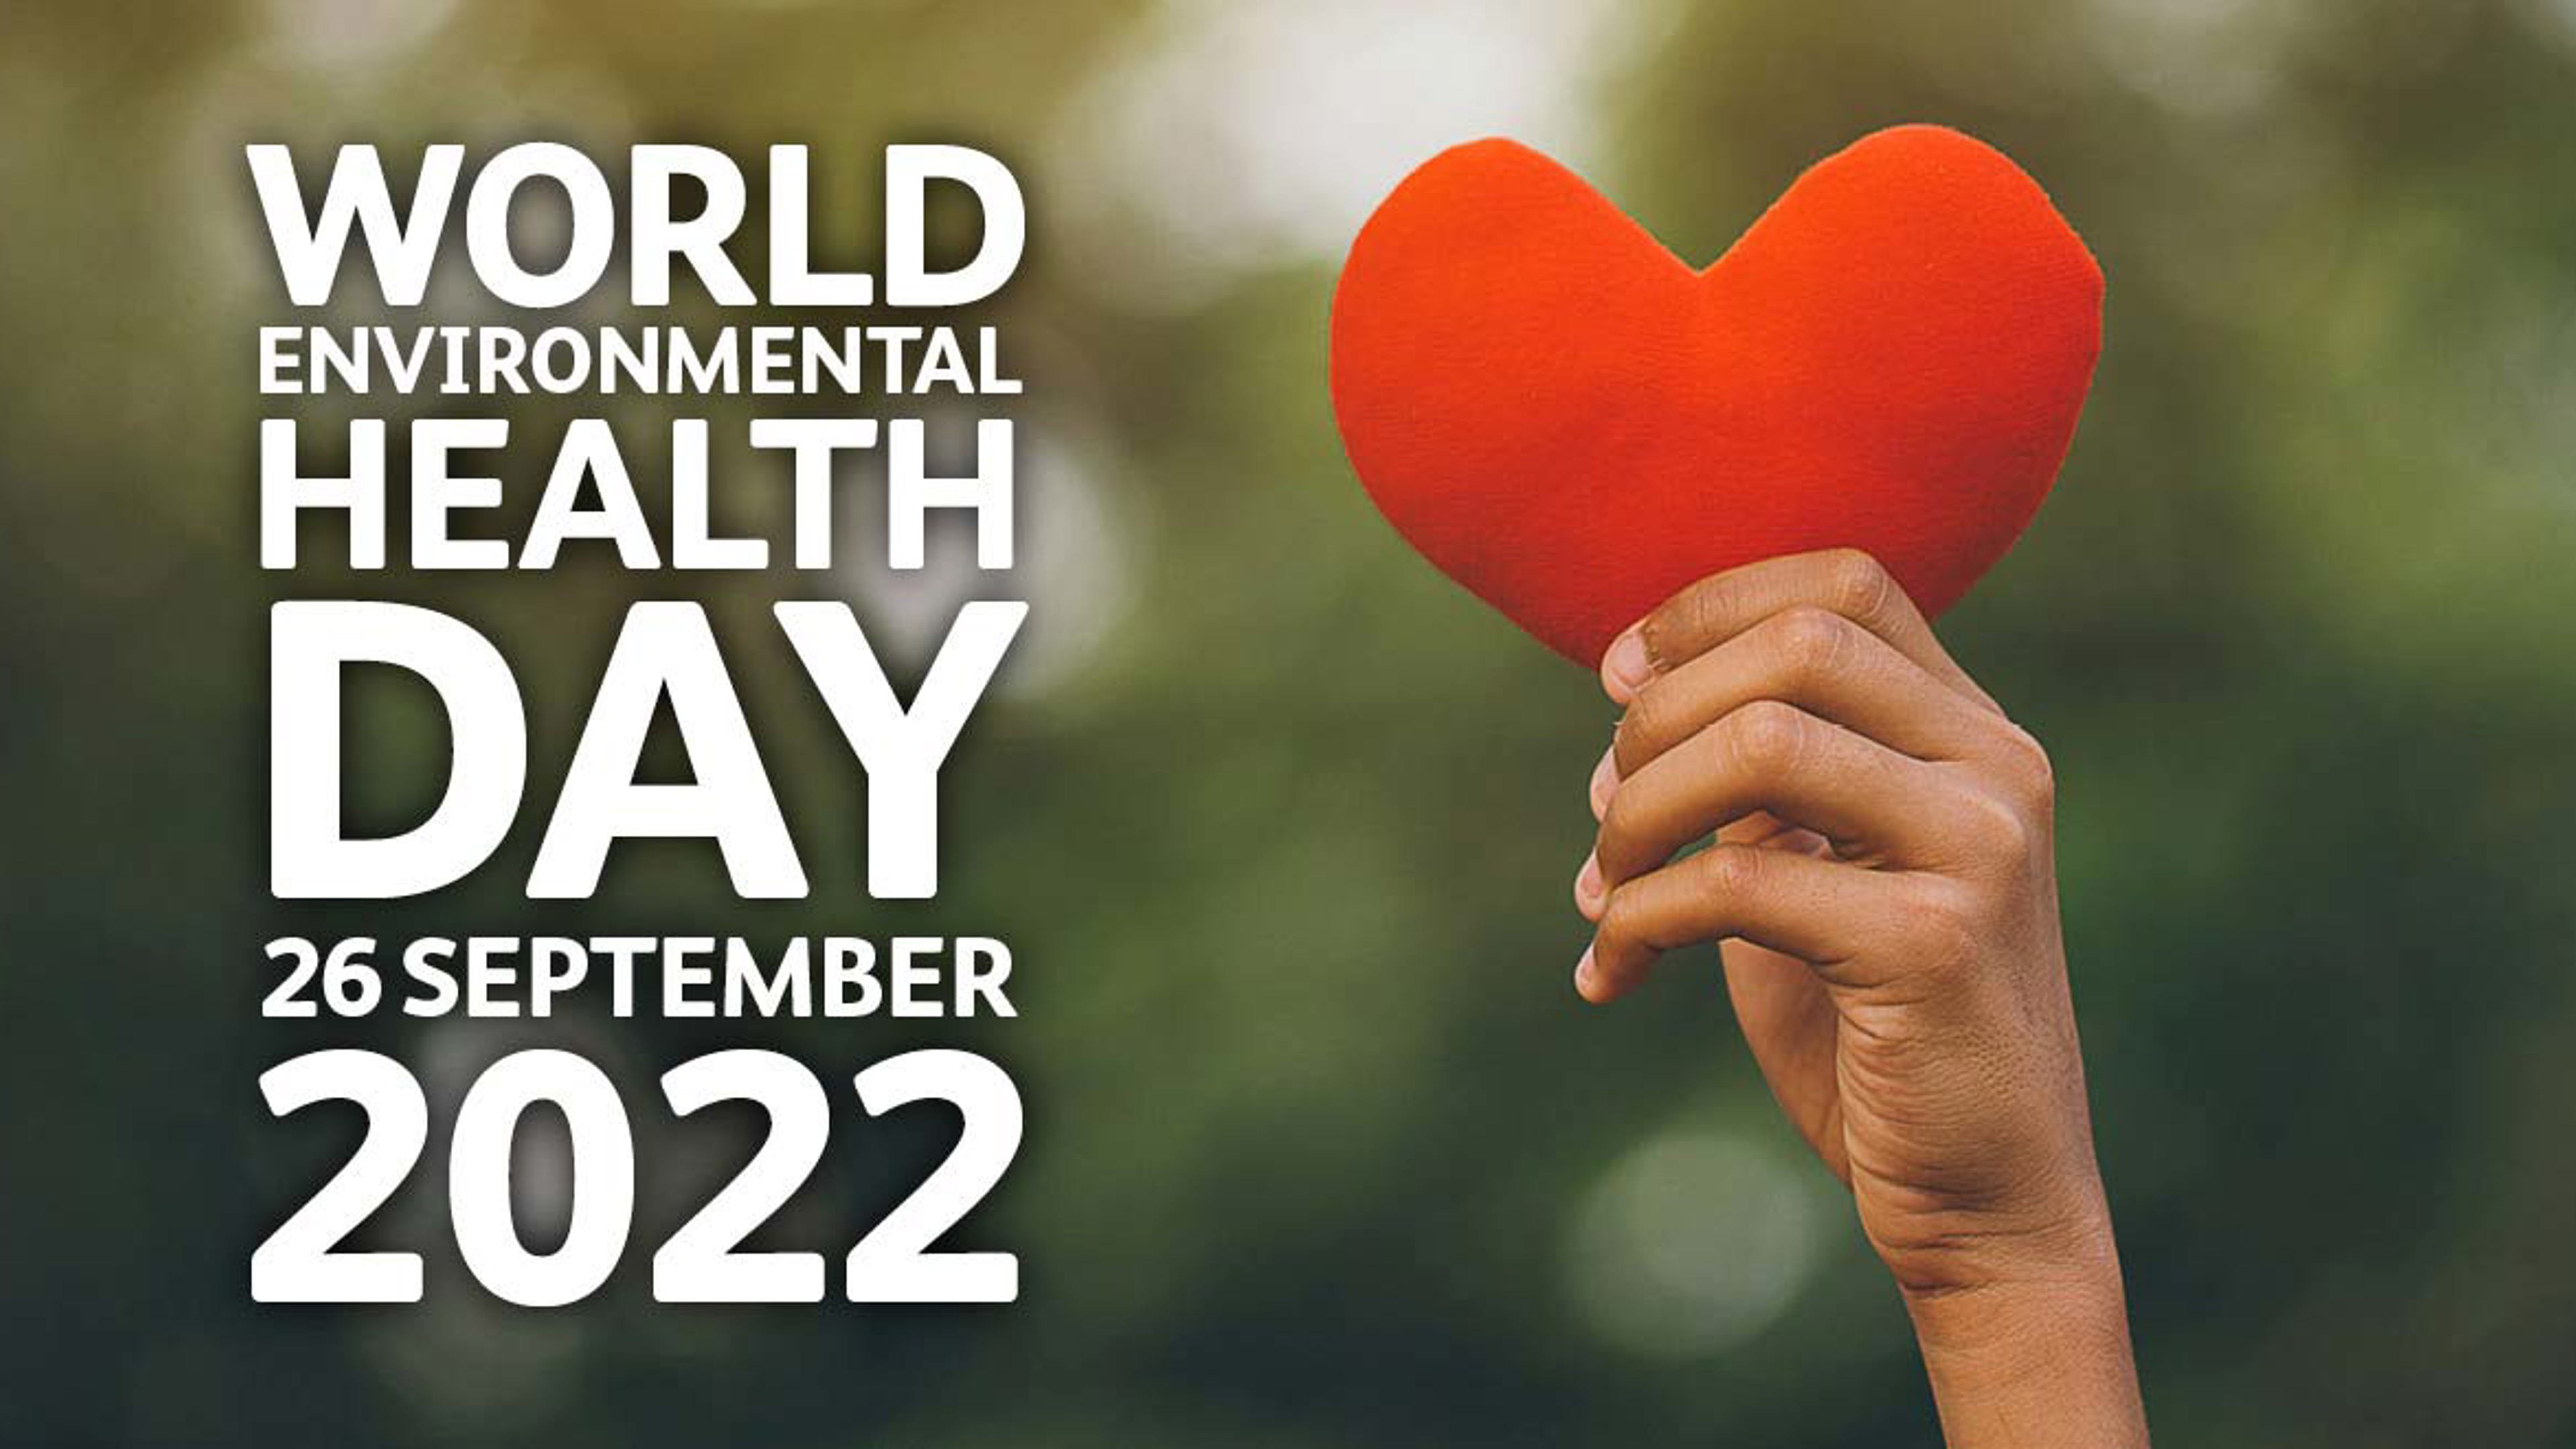 Celebrating World Environmental Health Day